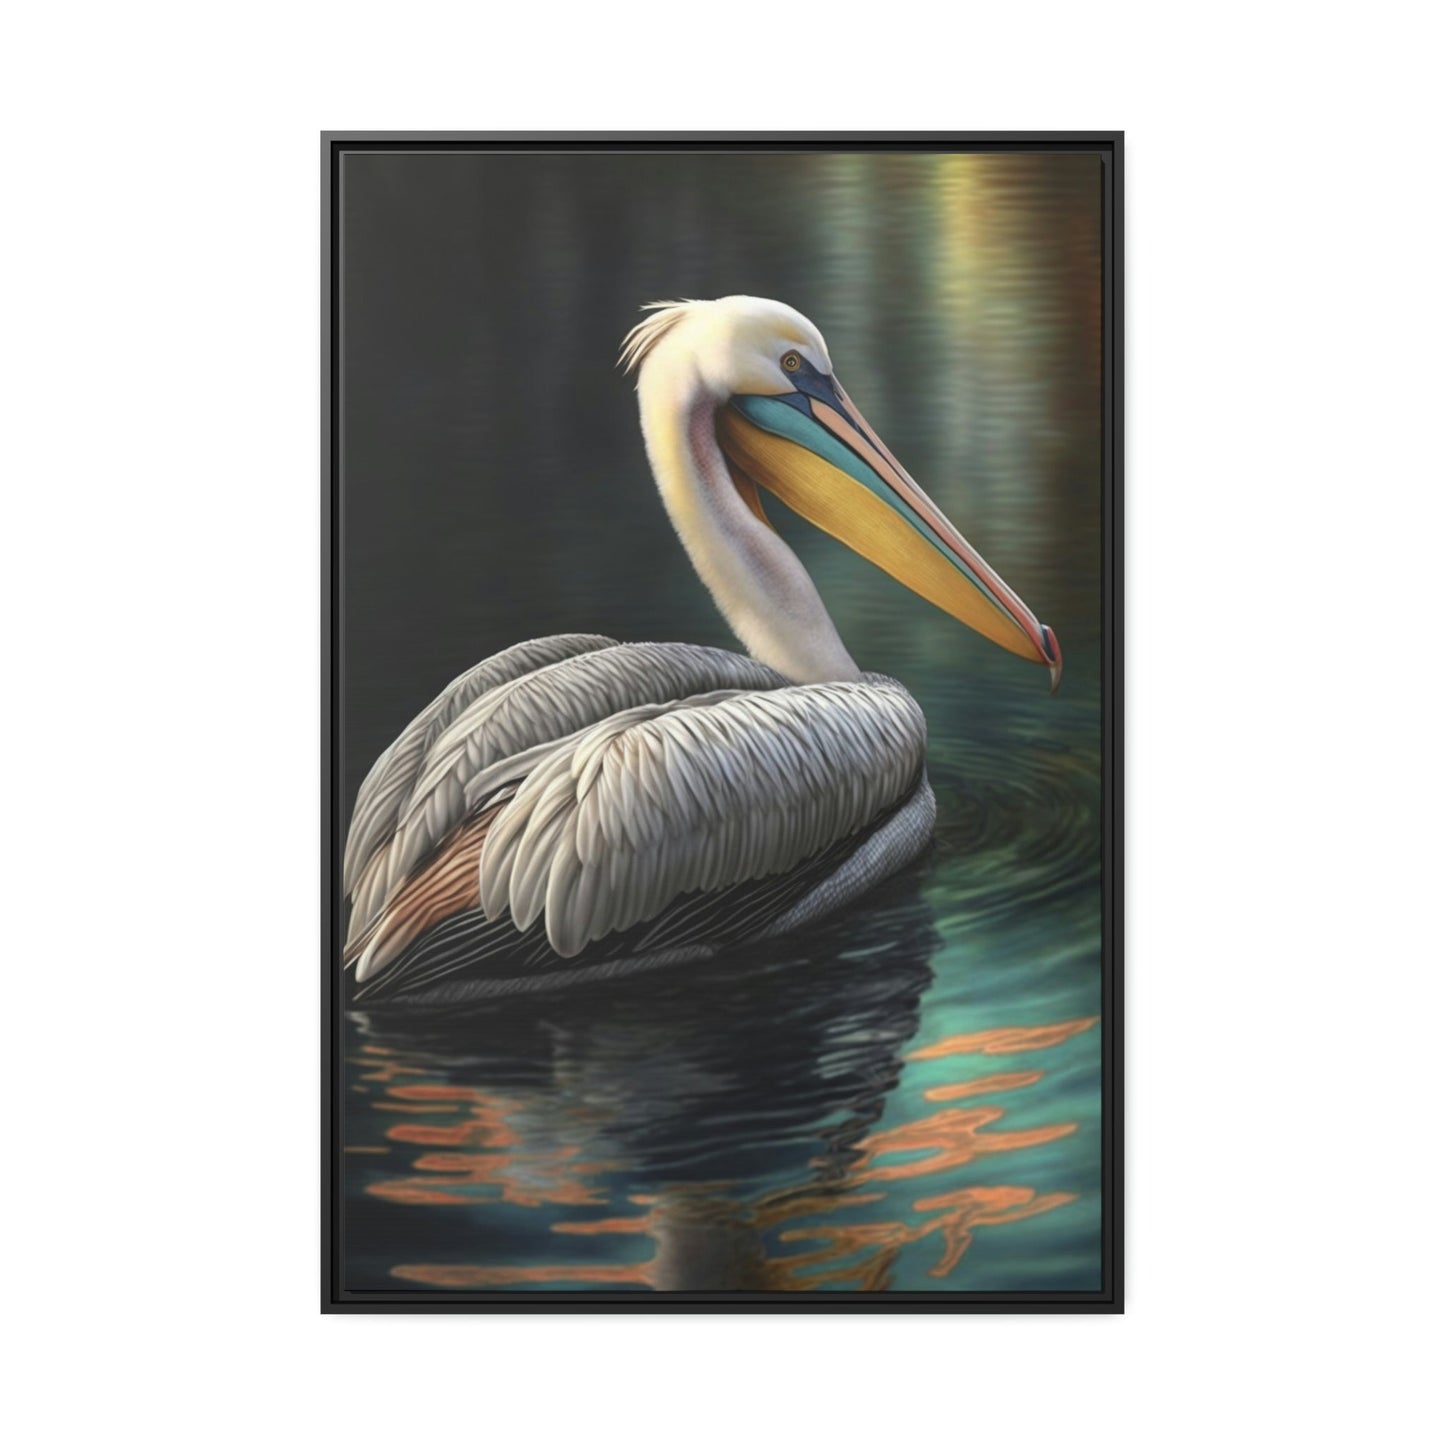 Pelican's Perch: A Coastal Canvas Delight